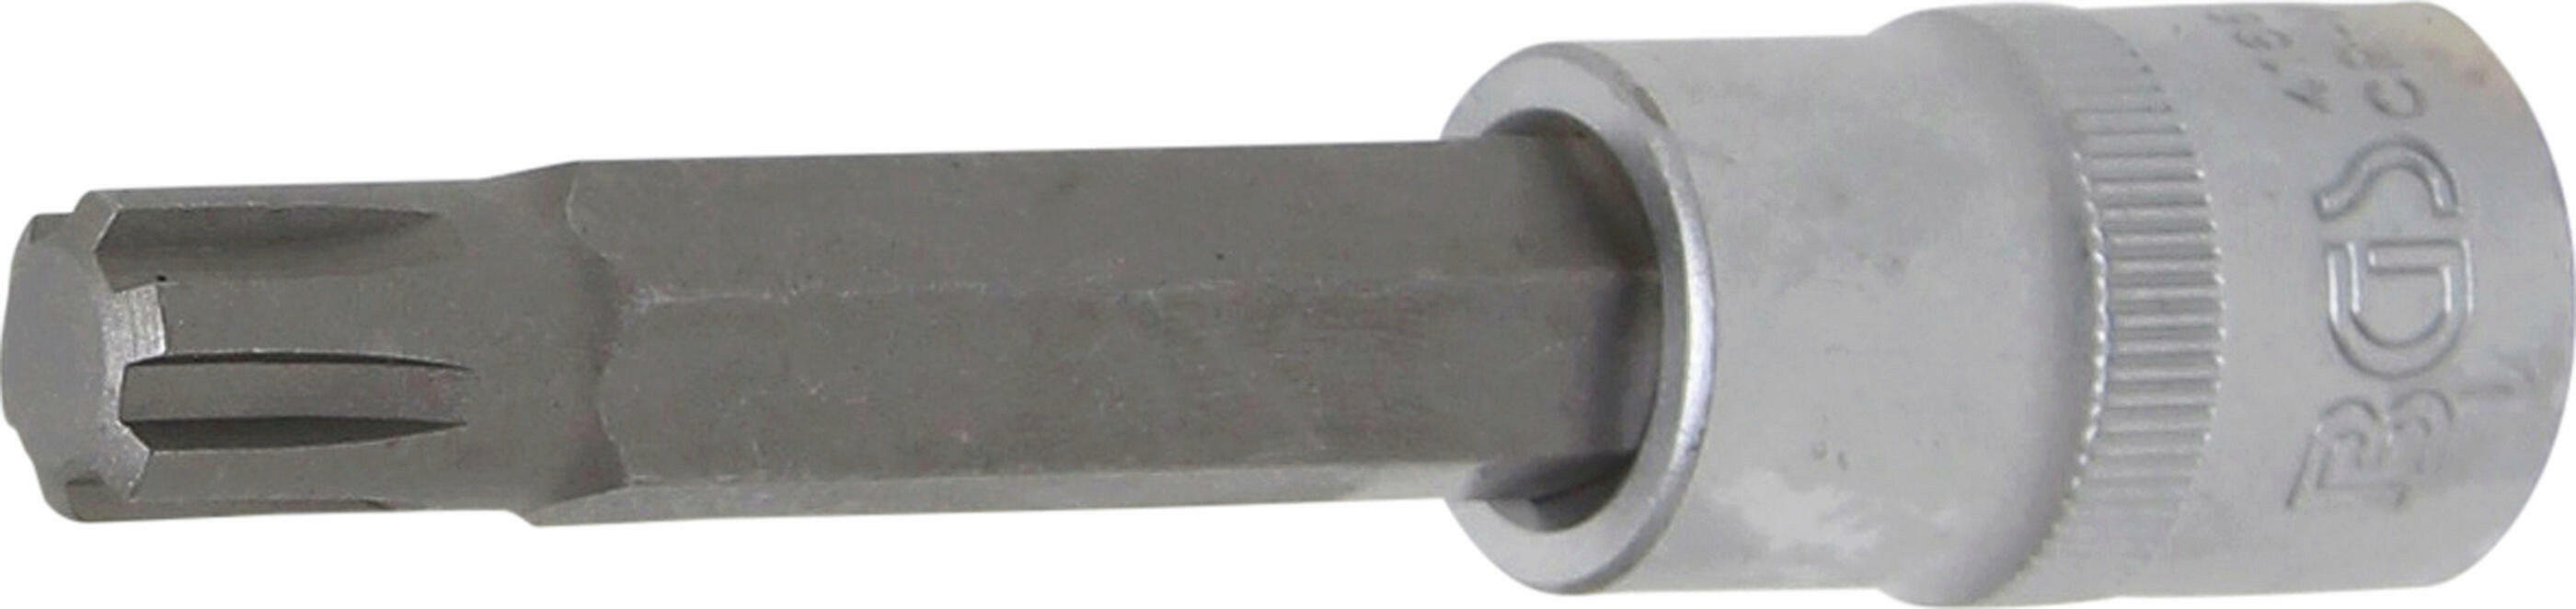 Bit-Einsatz | Länge 100 mm | Antrieb Innenvierkant 12,5 mm (1/2") | Keil-Profil (für RIBE) M12